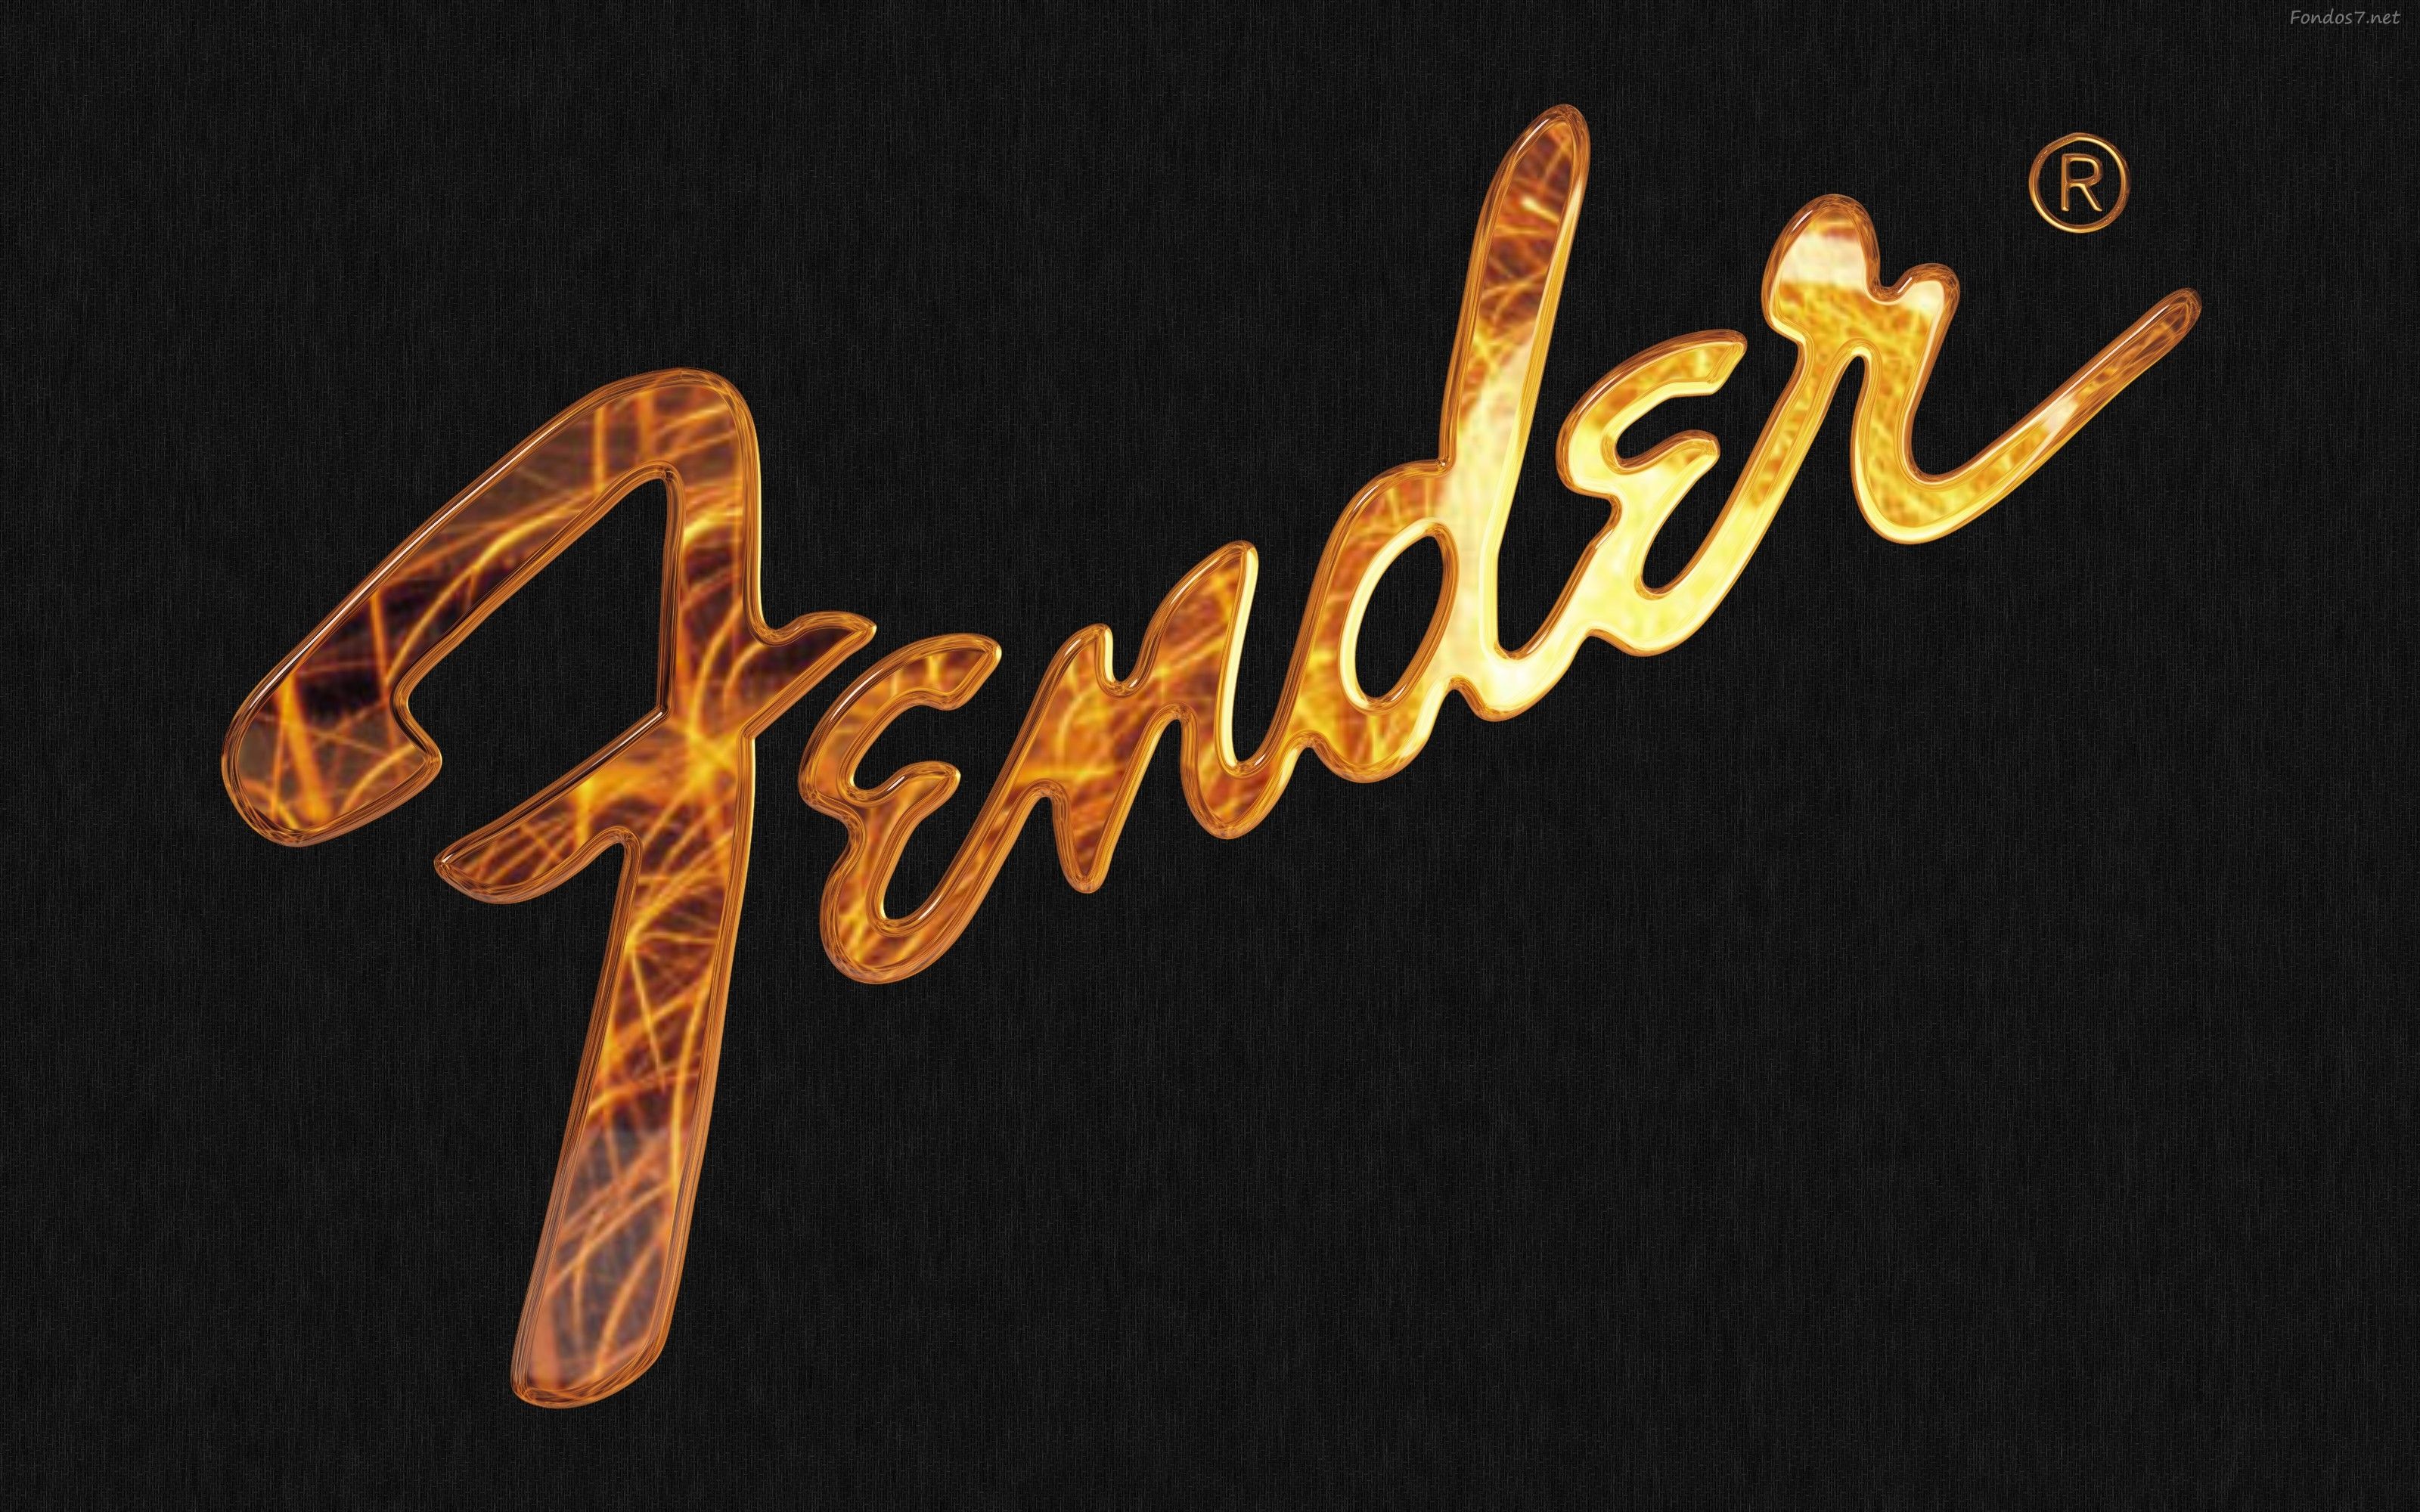 Fender Text Black Wallpaper HD Widescreen. IPICTUREE.COM. Guitar logo, Fender, Music image